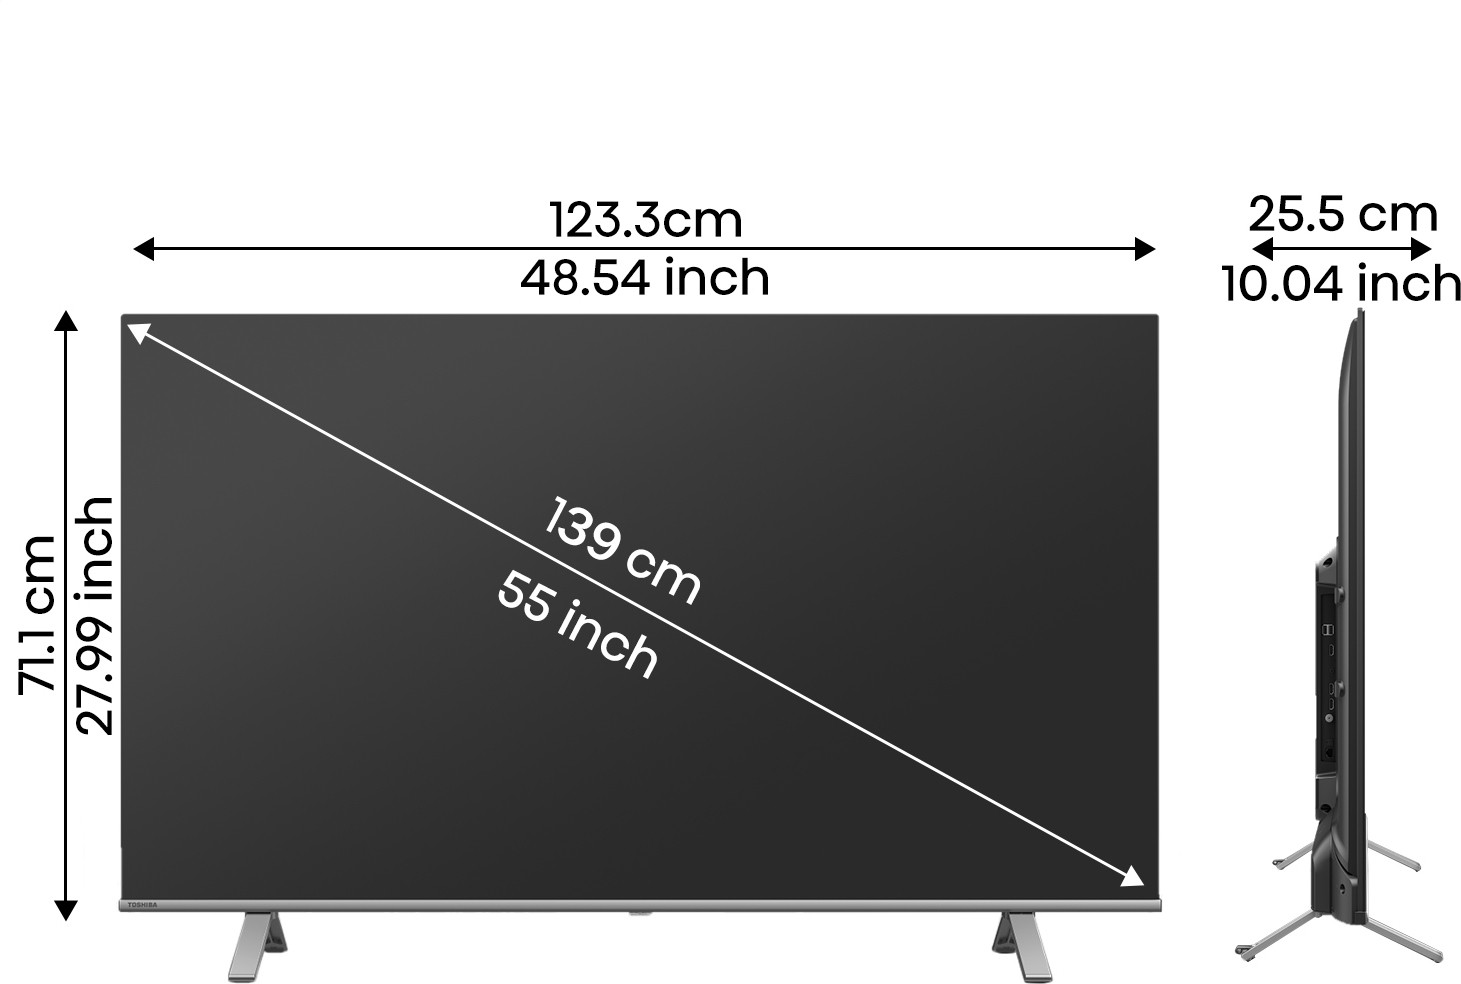 TOSHIBA  C350LP (55 inch) Ultra HD (4K)A+ Grade Ultra Vivid Panel (55C350LP)